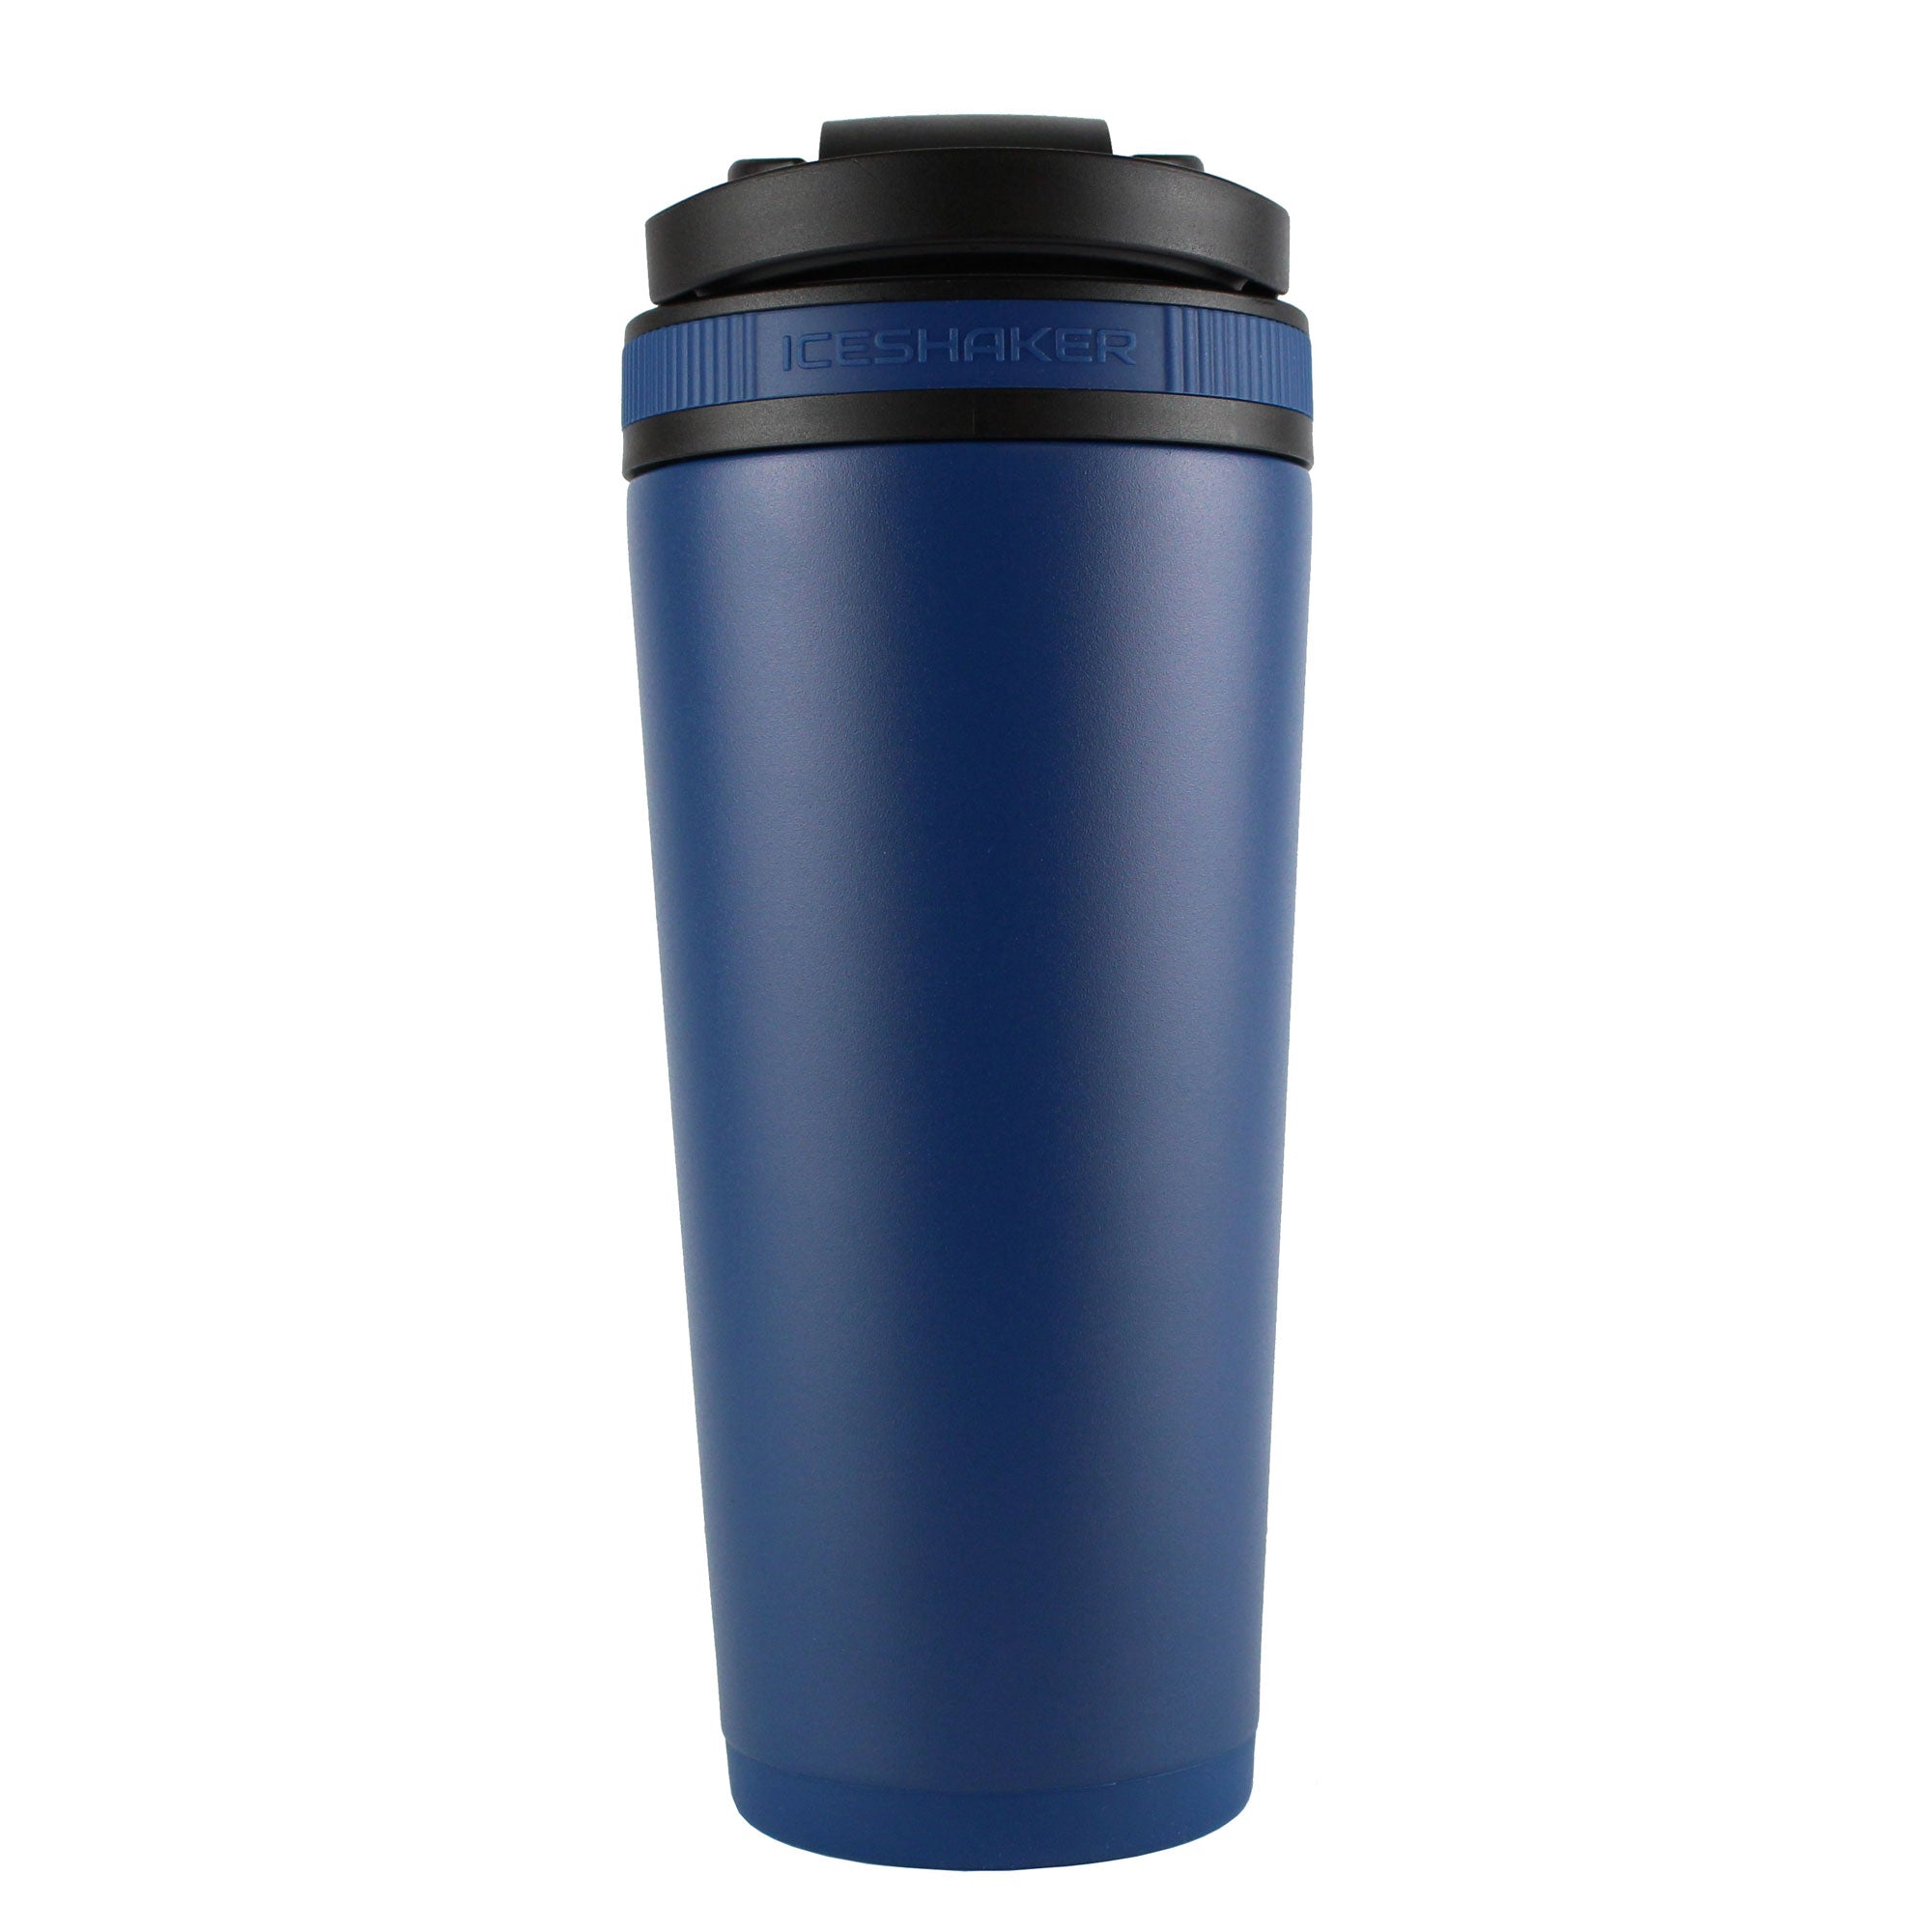 Multi-Function Travel Mug and Tumbler, Tea Infuser Water Bottle